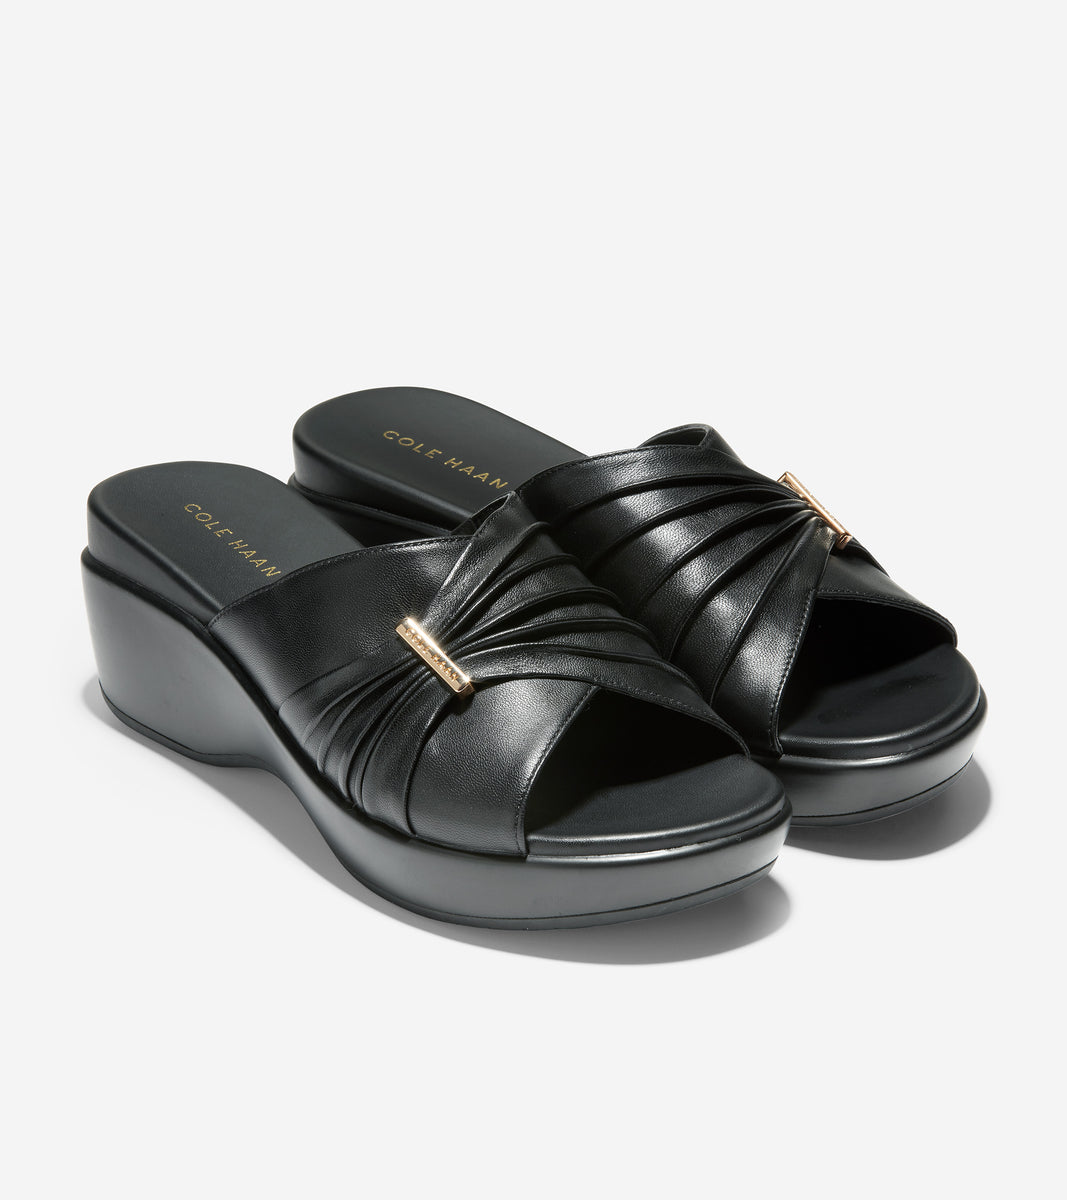 ColeHaan-Aubree Ruched Slide Sandal-w17379-Black Leather